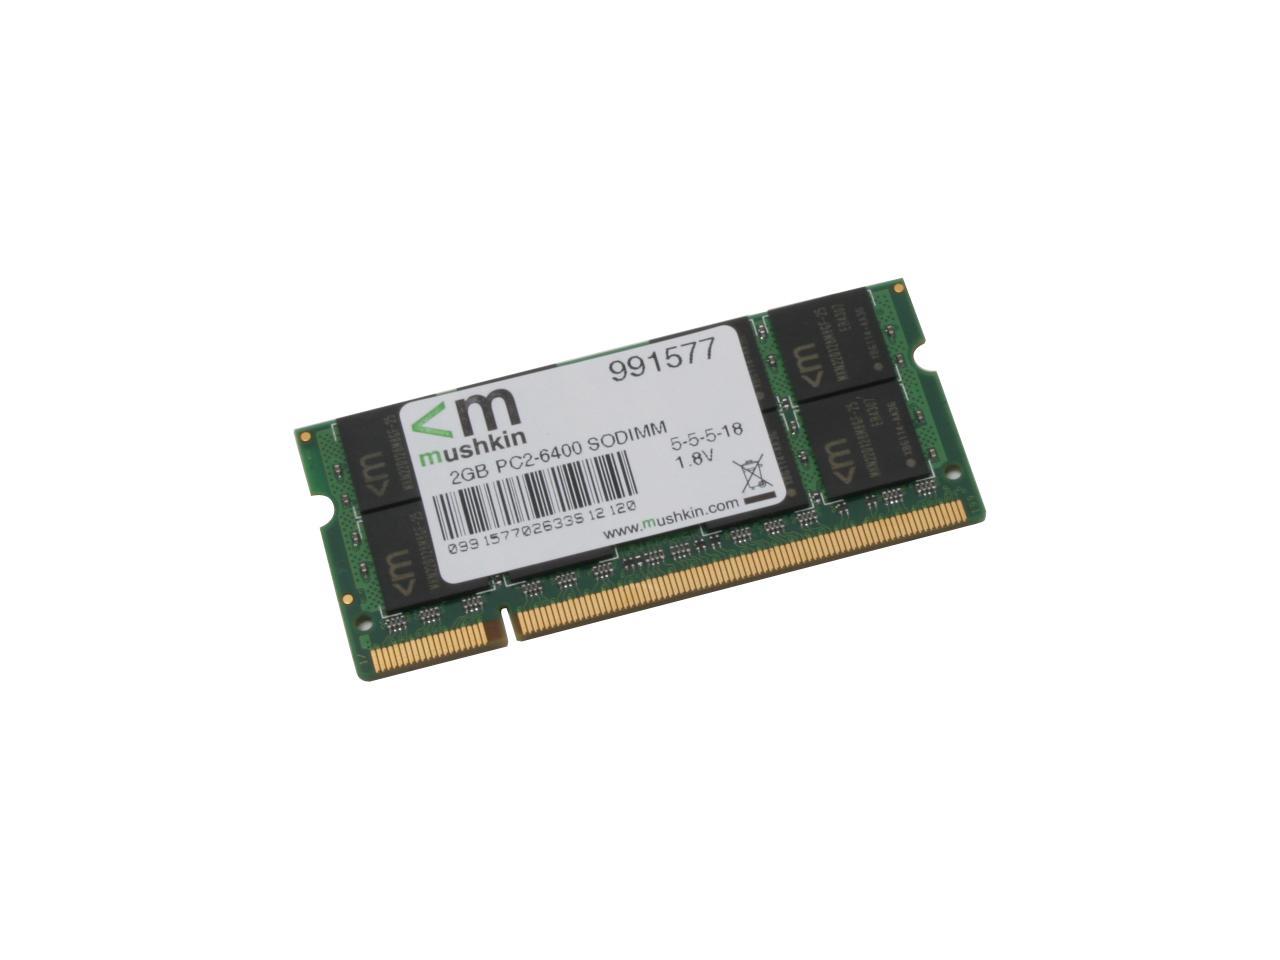 Mushkin Enhanced Essentials 2GB 200-Pin DDR2 SO-DIMM DDR2 800 (PC2 6400) Laptop Memory Model 991577